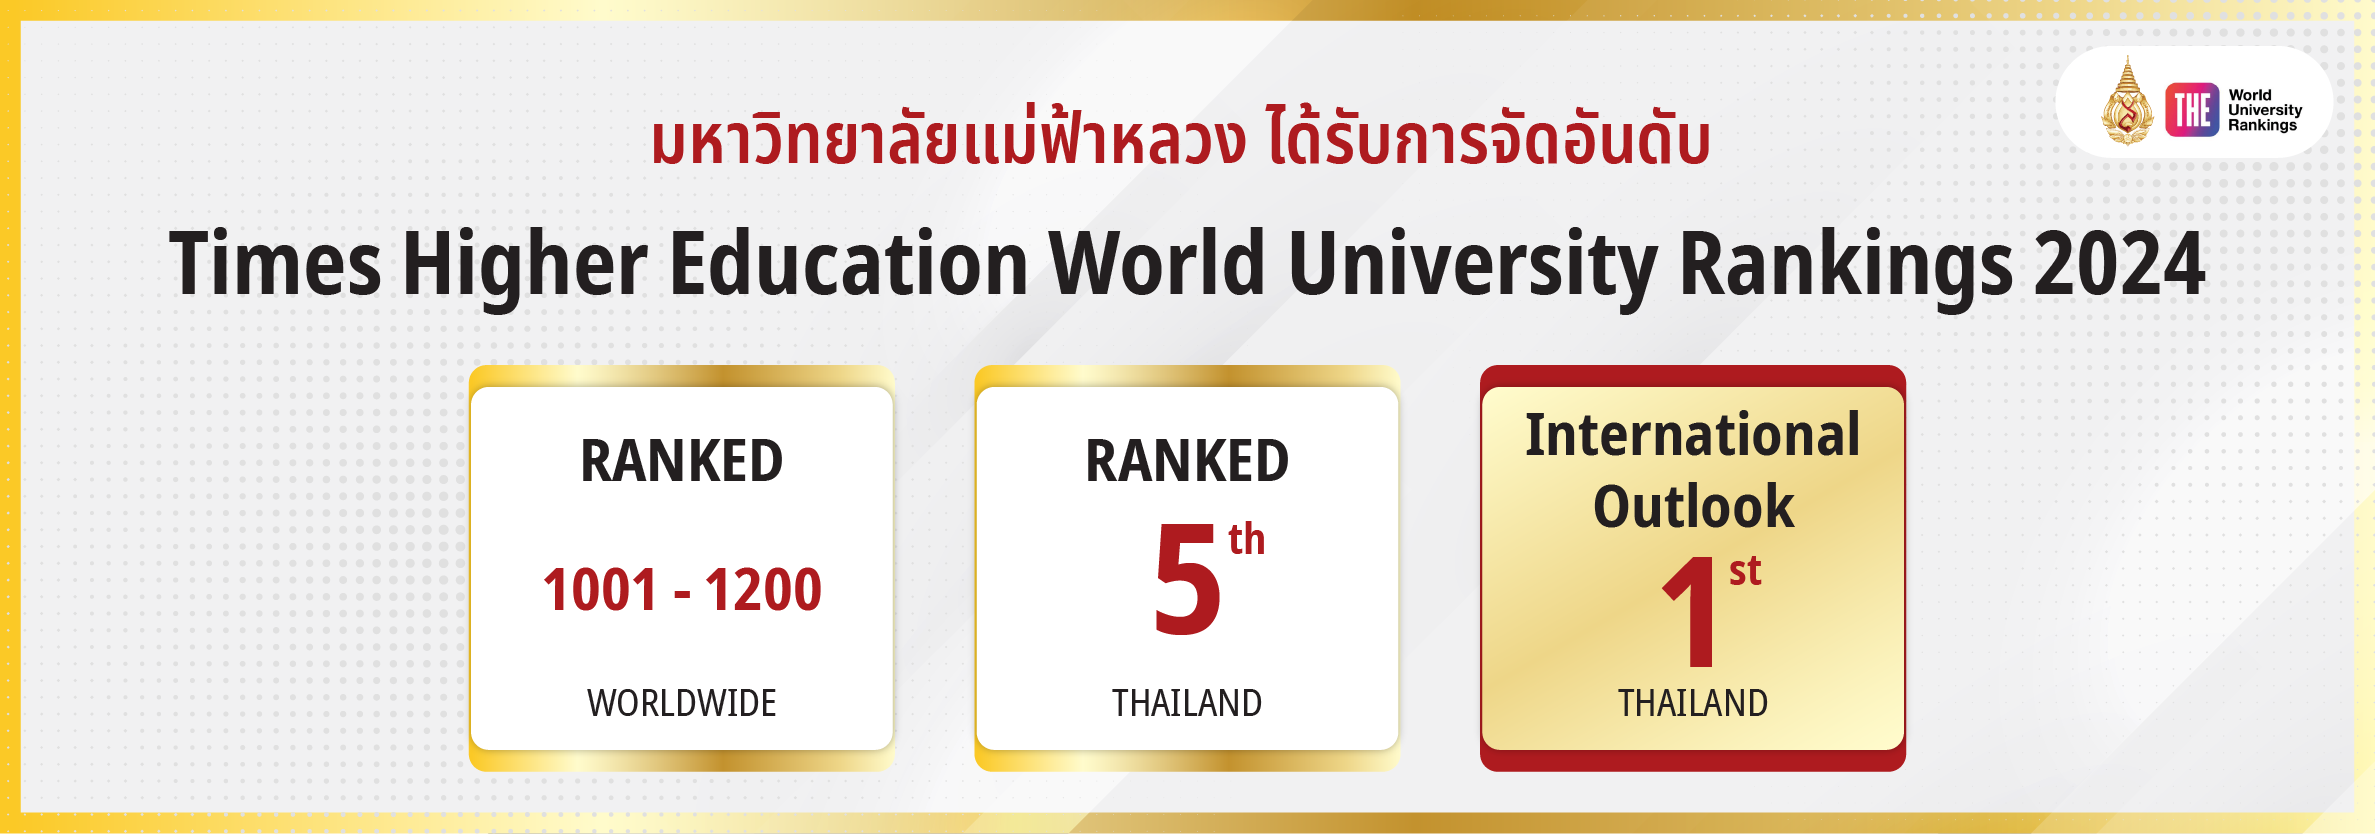 Times Higher Education World University Rankings 2024